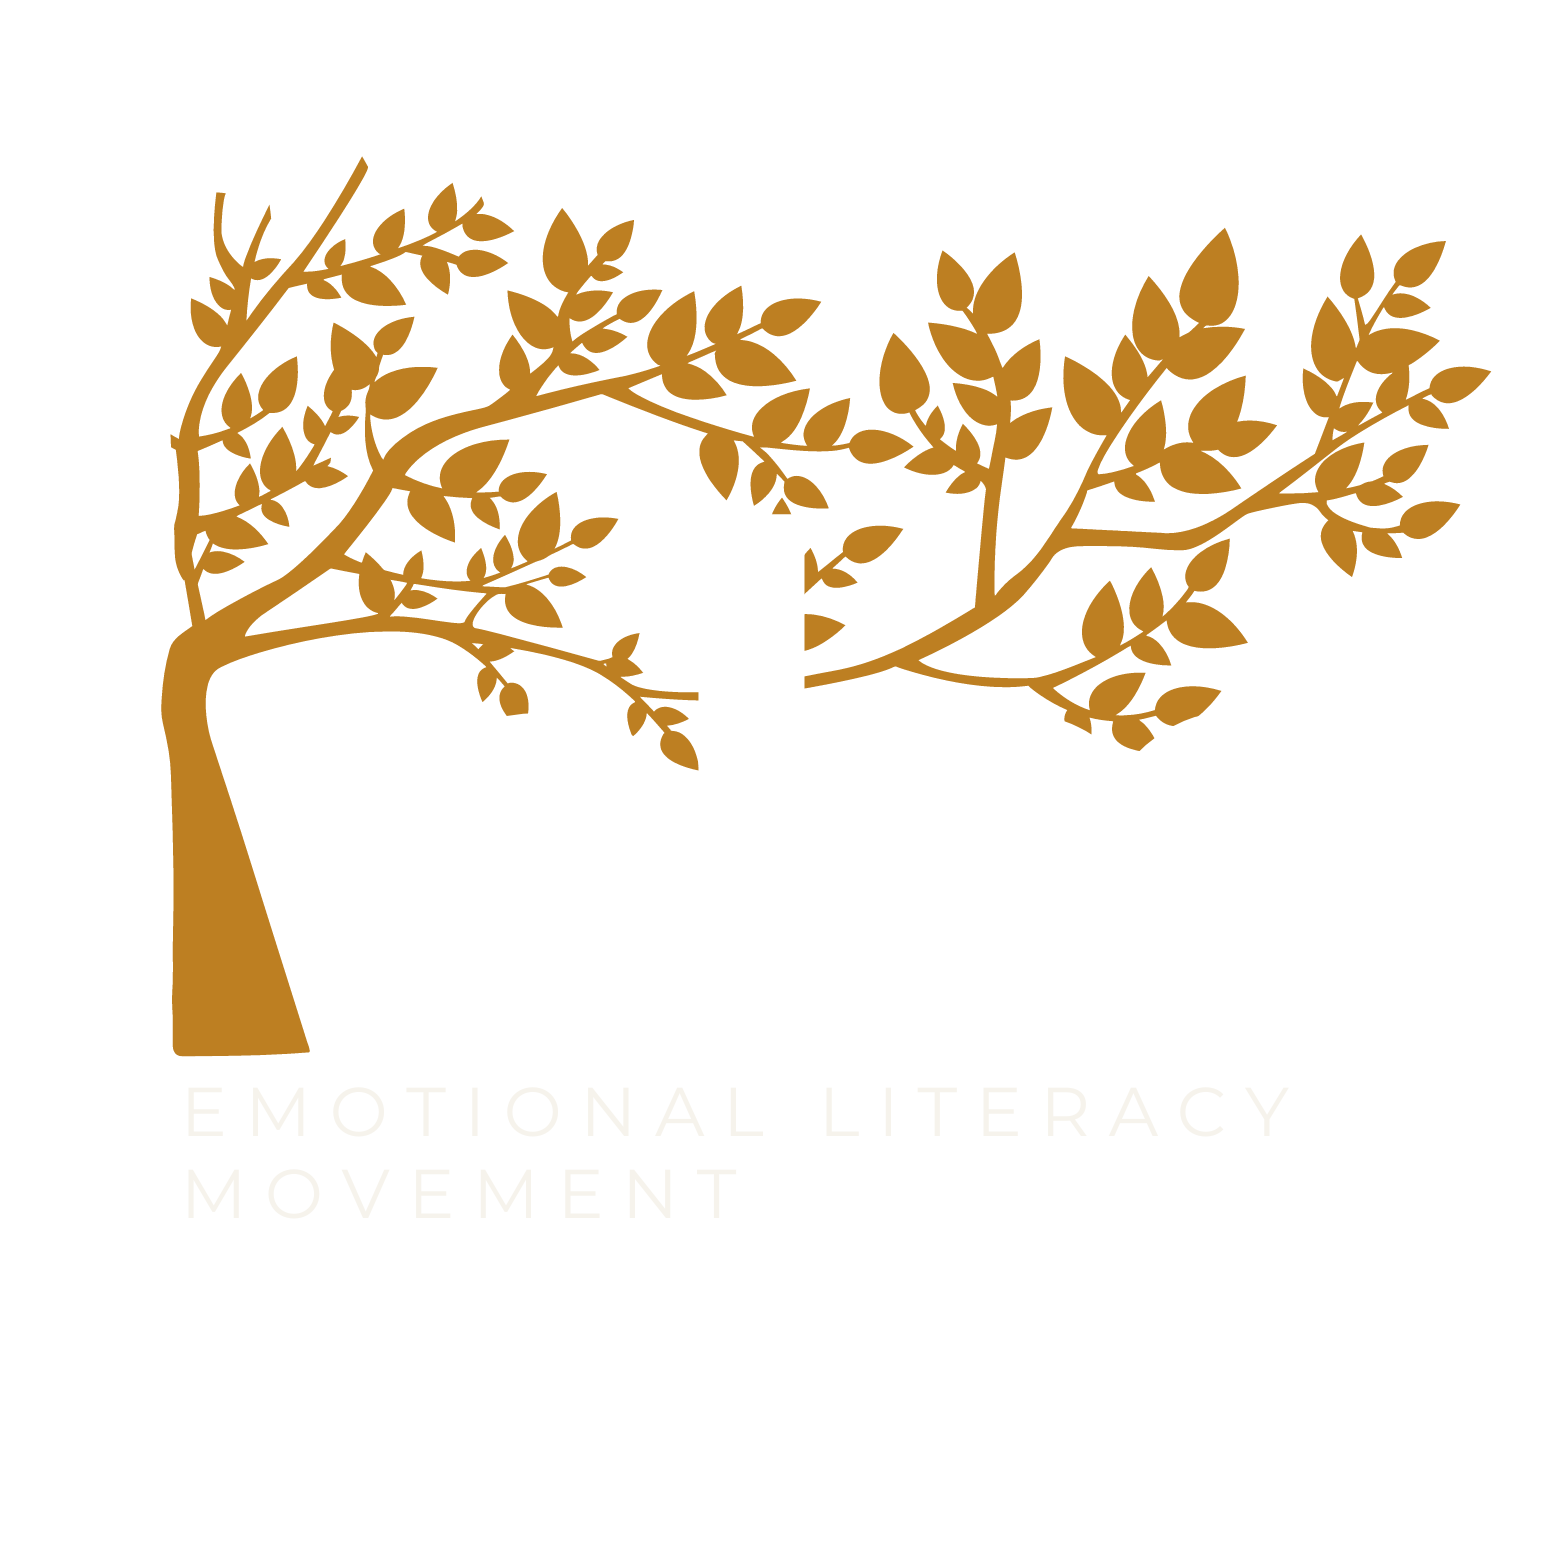 Emotional Literacy Movement logo